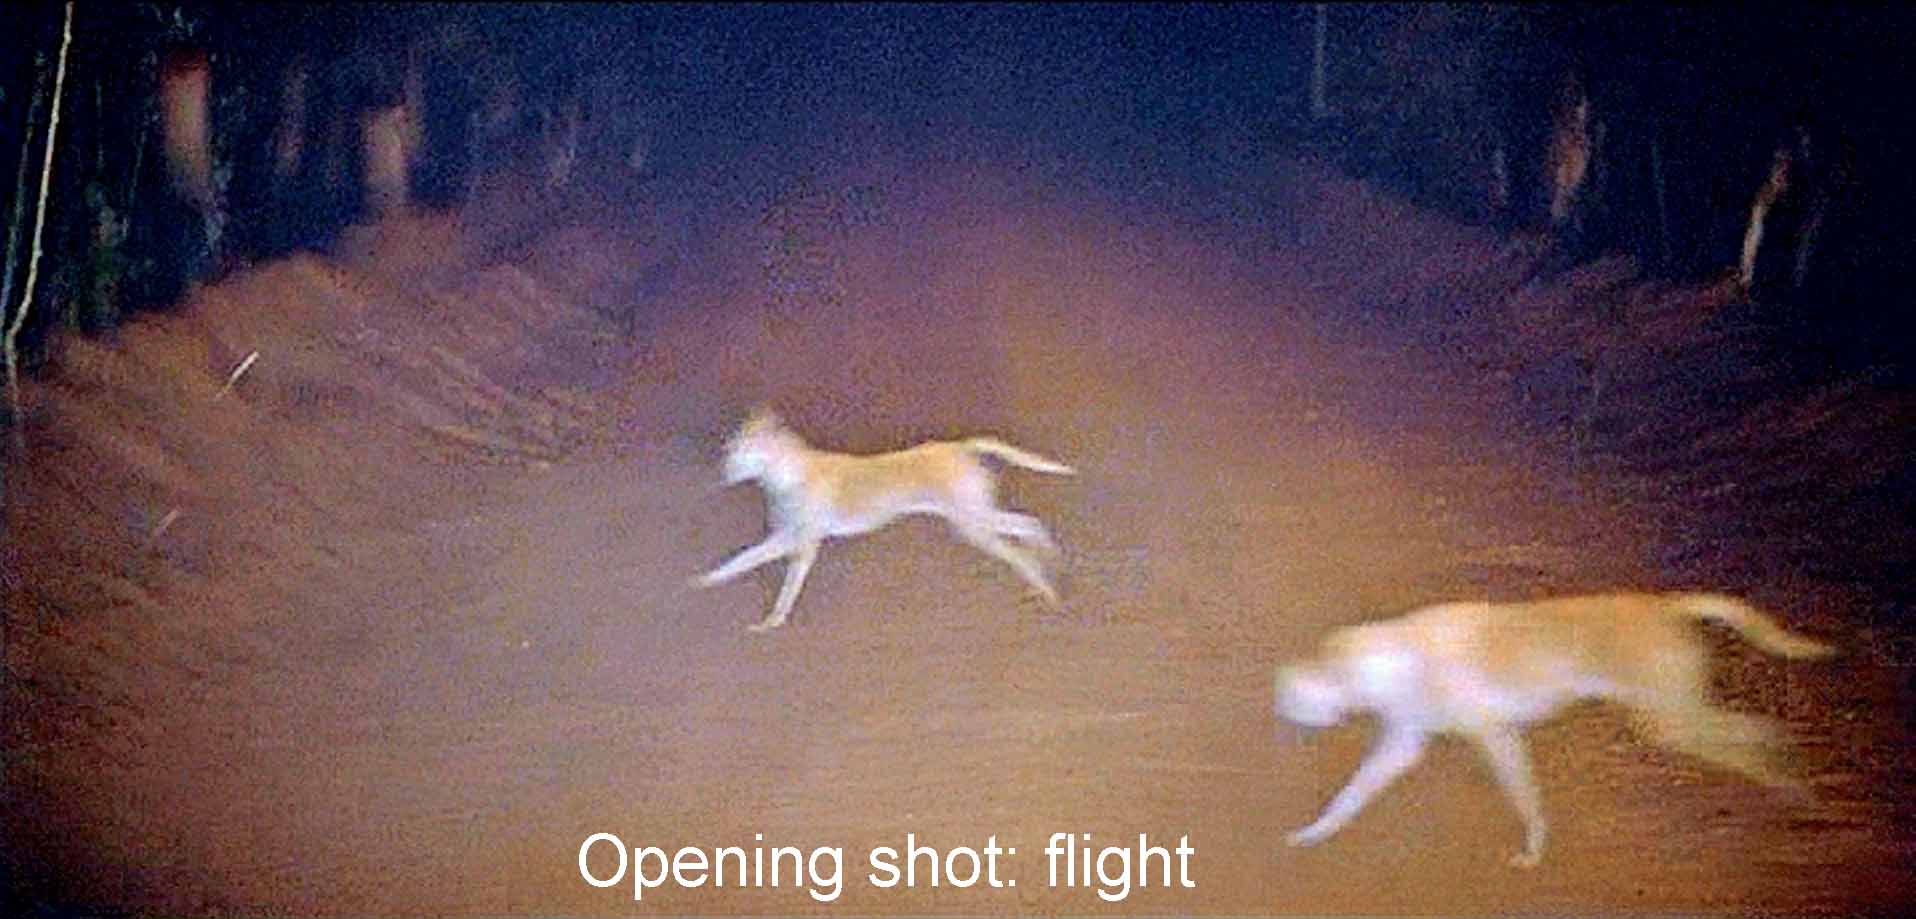 Opening shot: flight